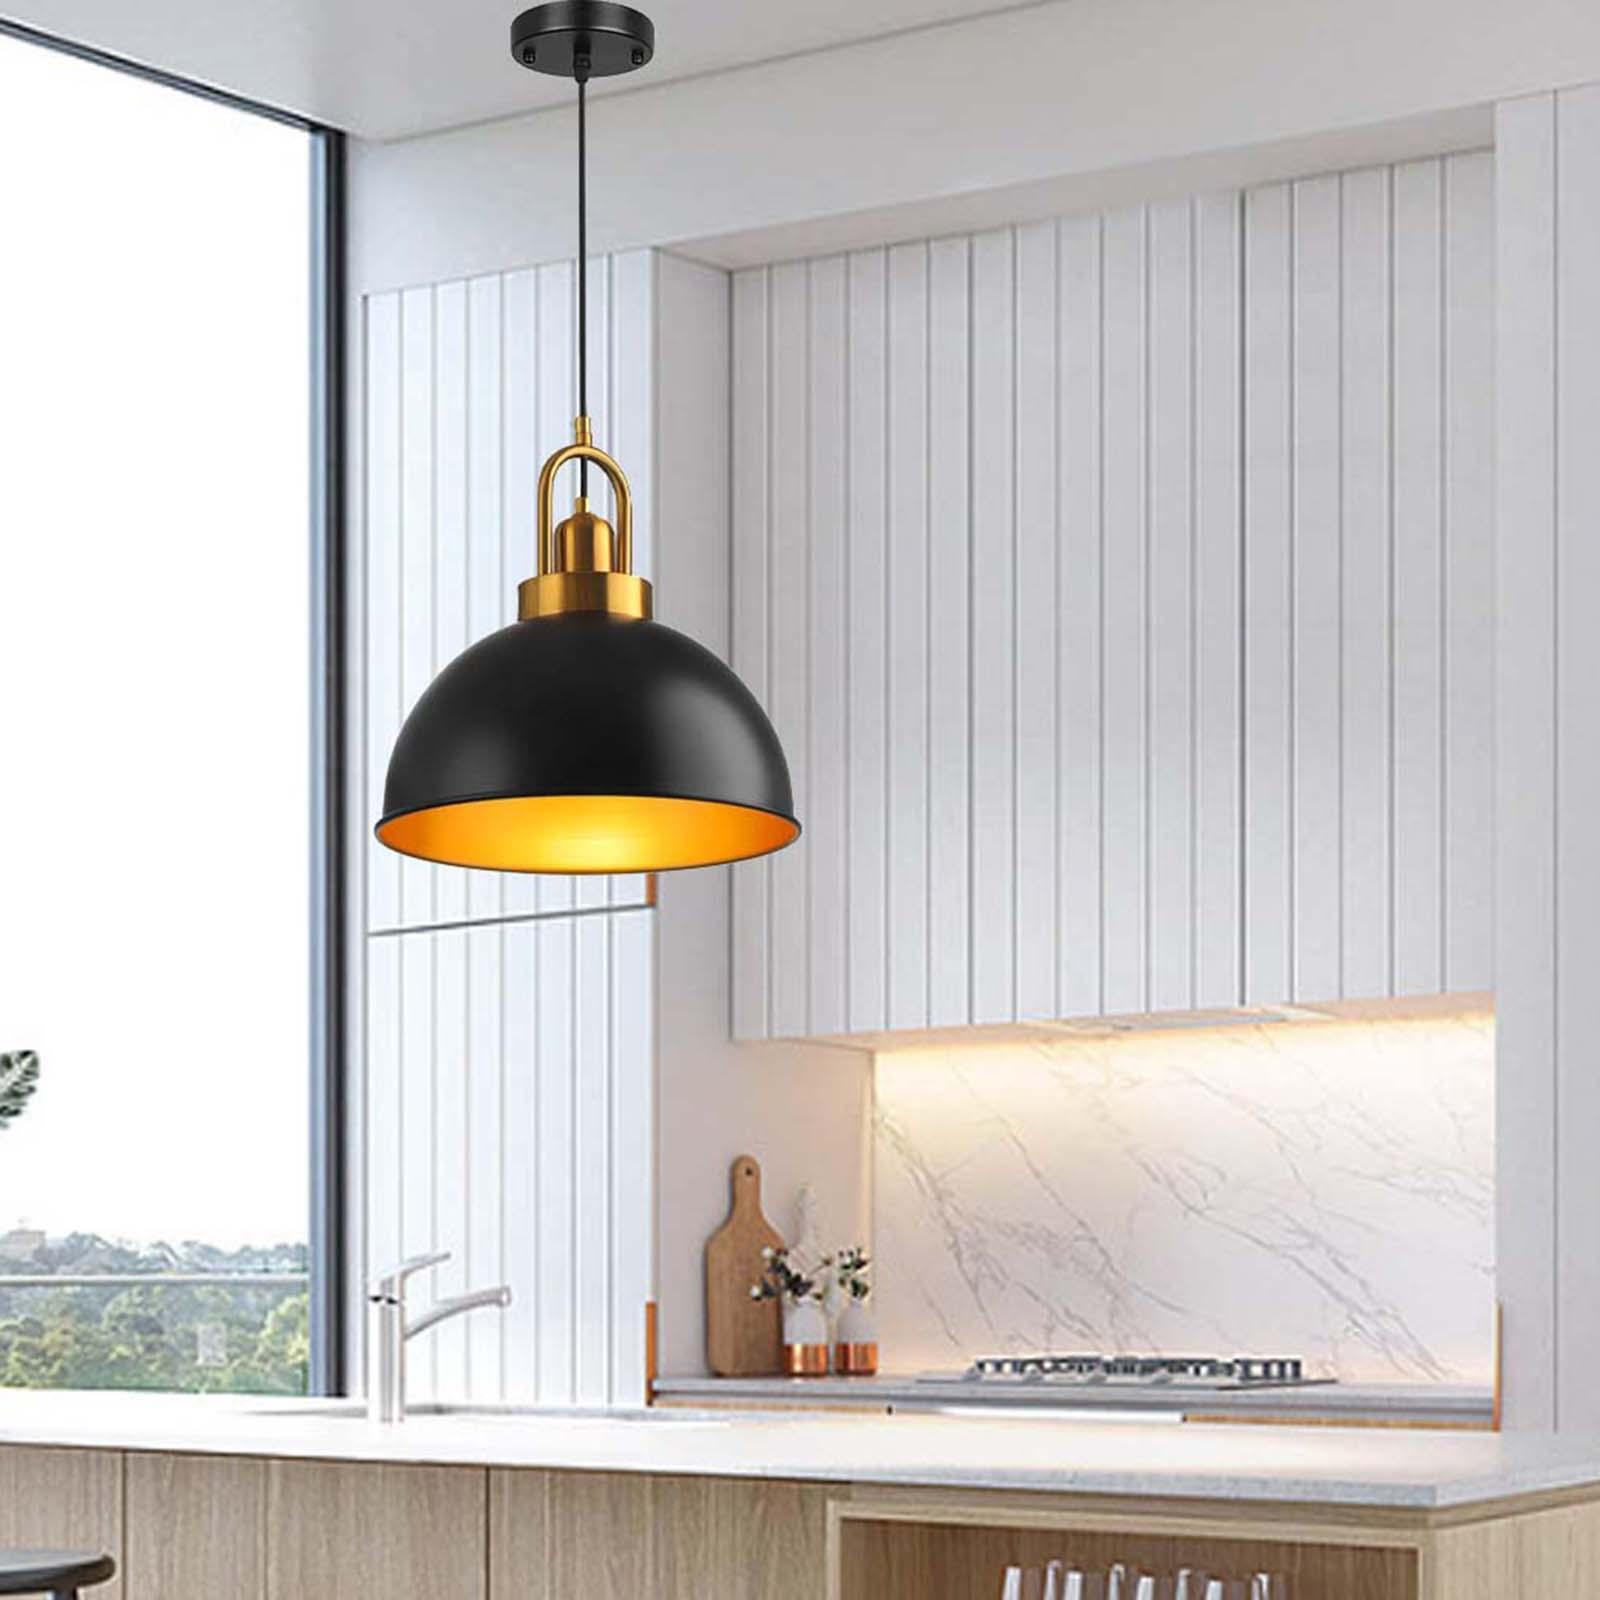 Pendant Light Fixture Portable Ceiling Light Fixture for Hallway Cafe